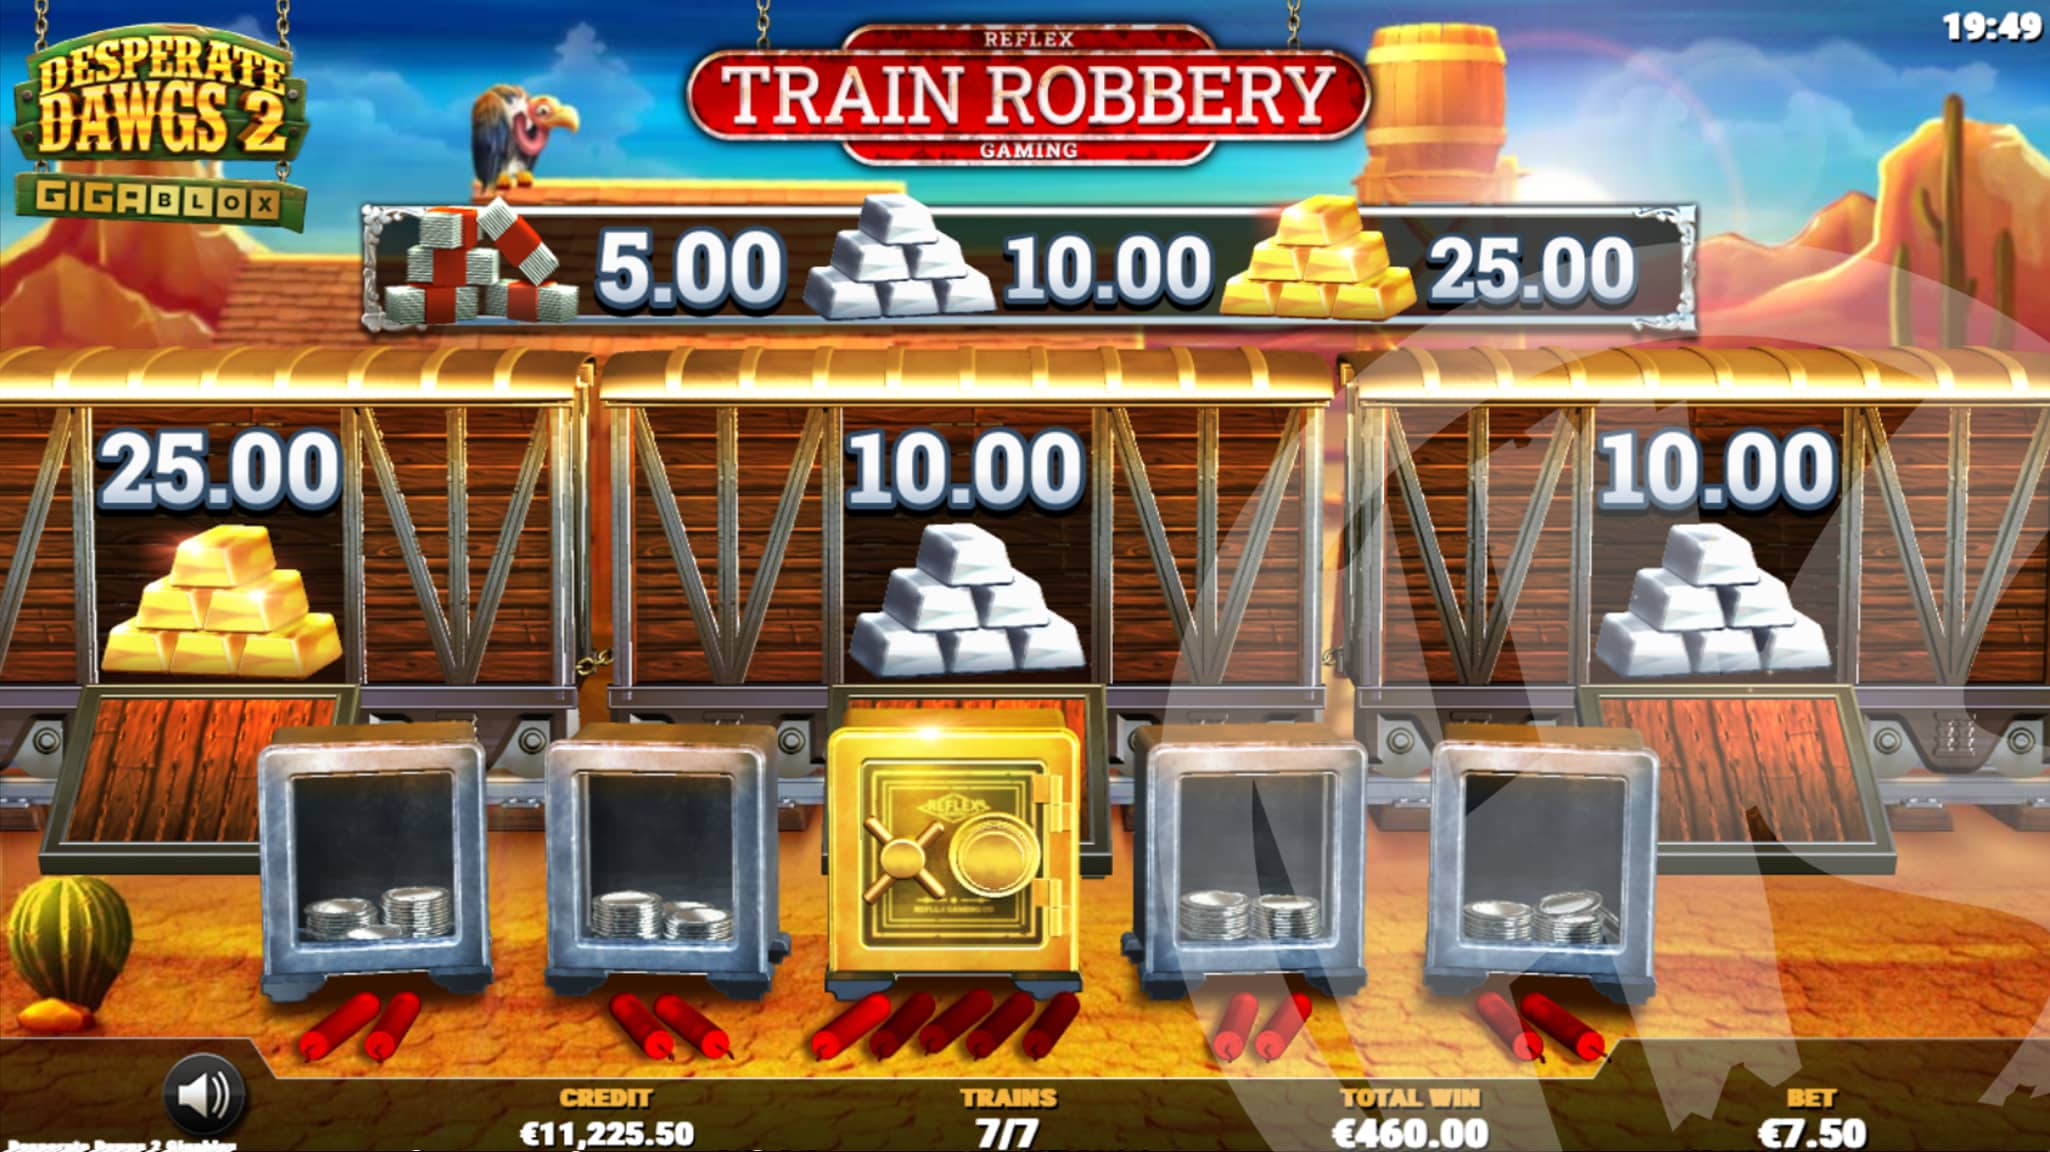 Desperate Dawgs 2 Gigablox Train Robber Bonus